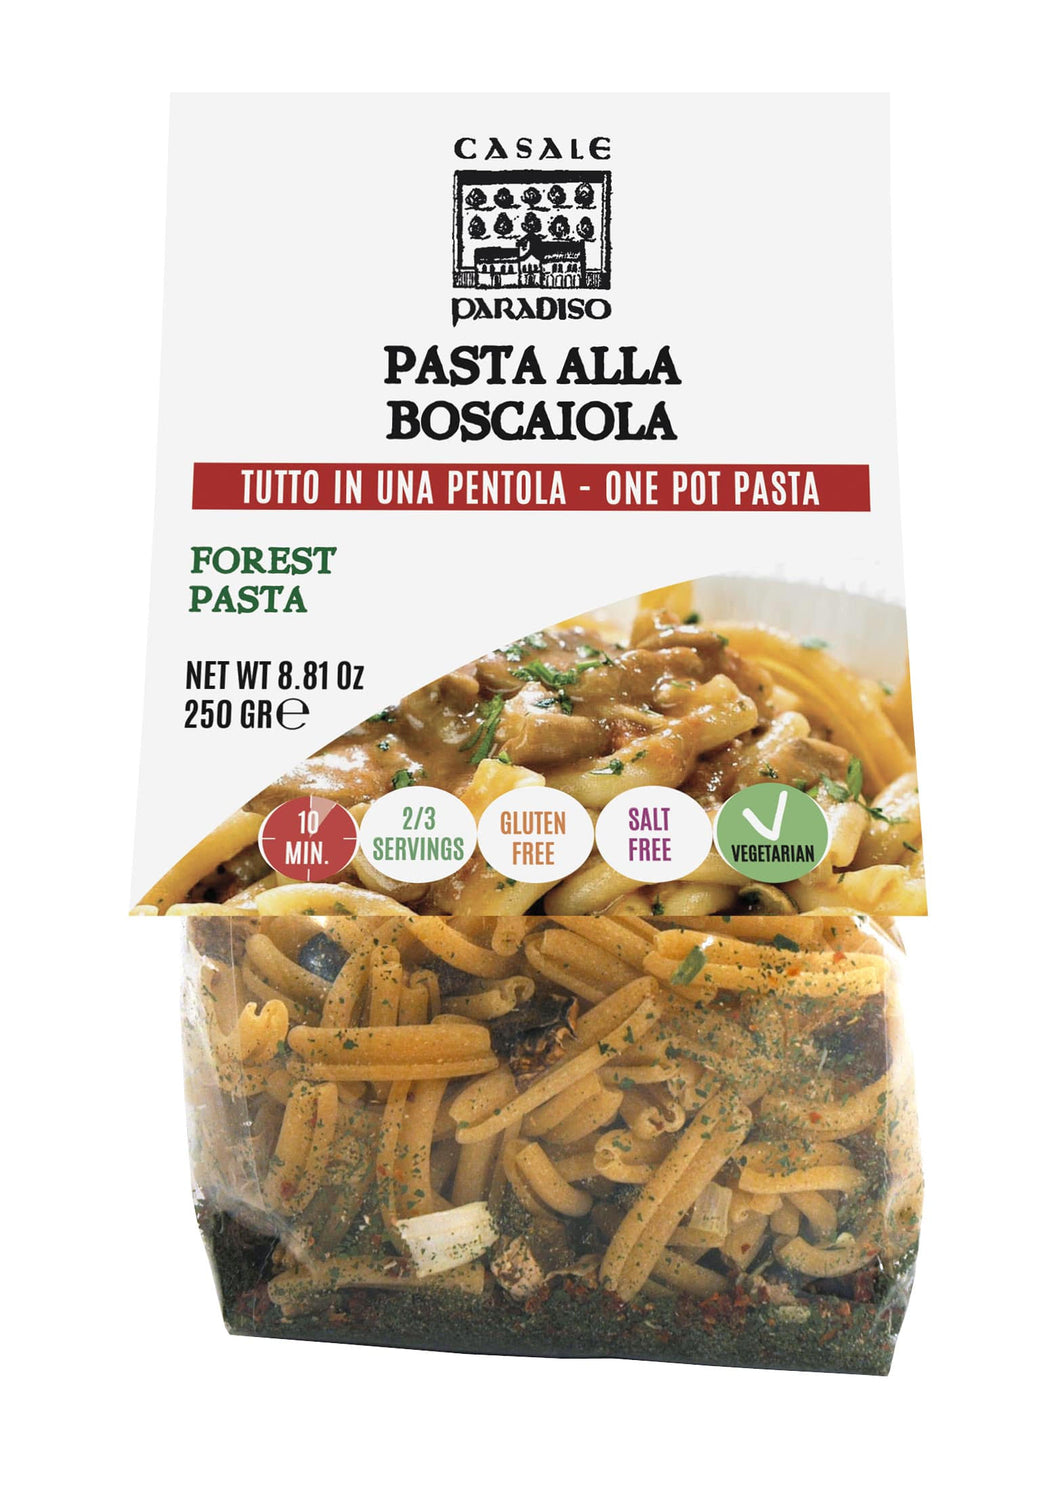 Pasta Alla Boscaiola- Forest Pasta by Casale Paradiso